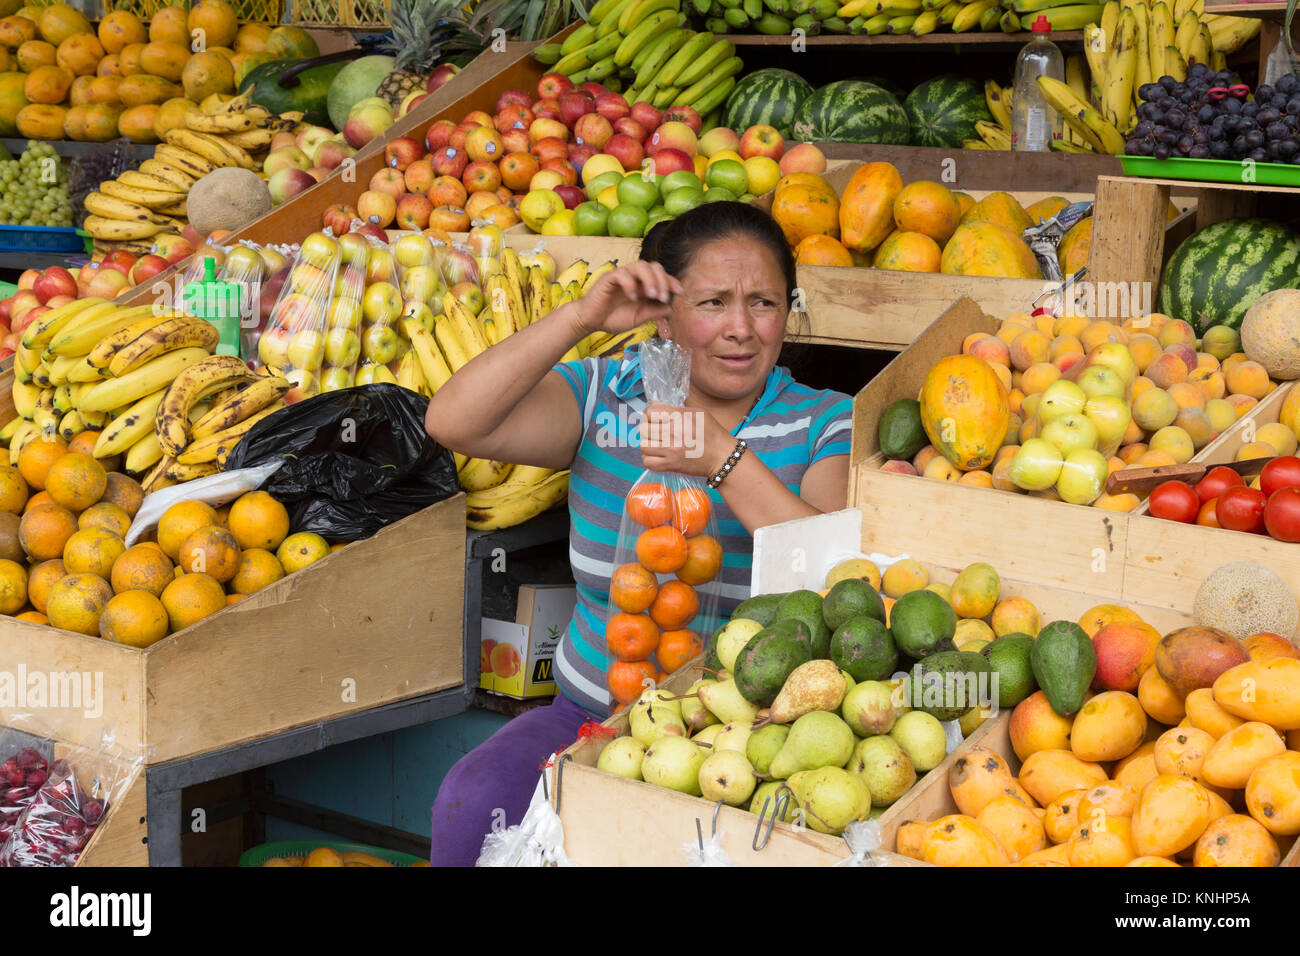 Ecuador food market - a woman selling fruit at an indoor market stall, Gualaceo market, Gualaceo, Southern Ecuador, South America Stock Photo